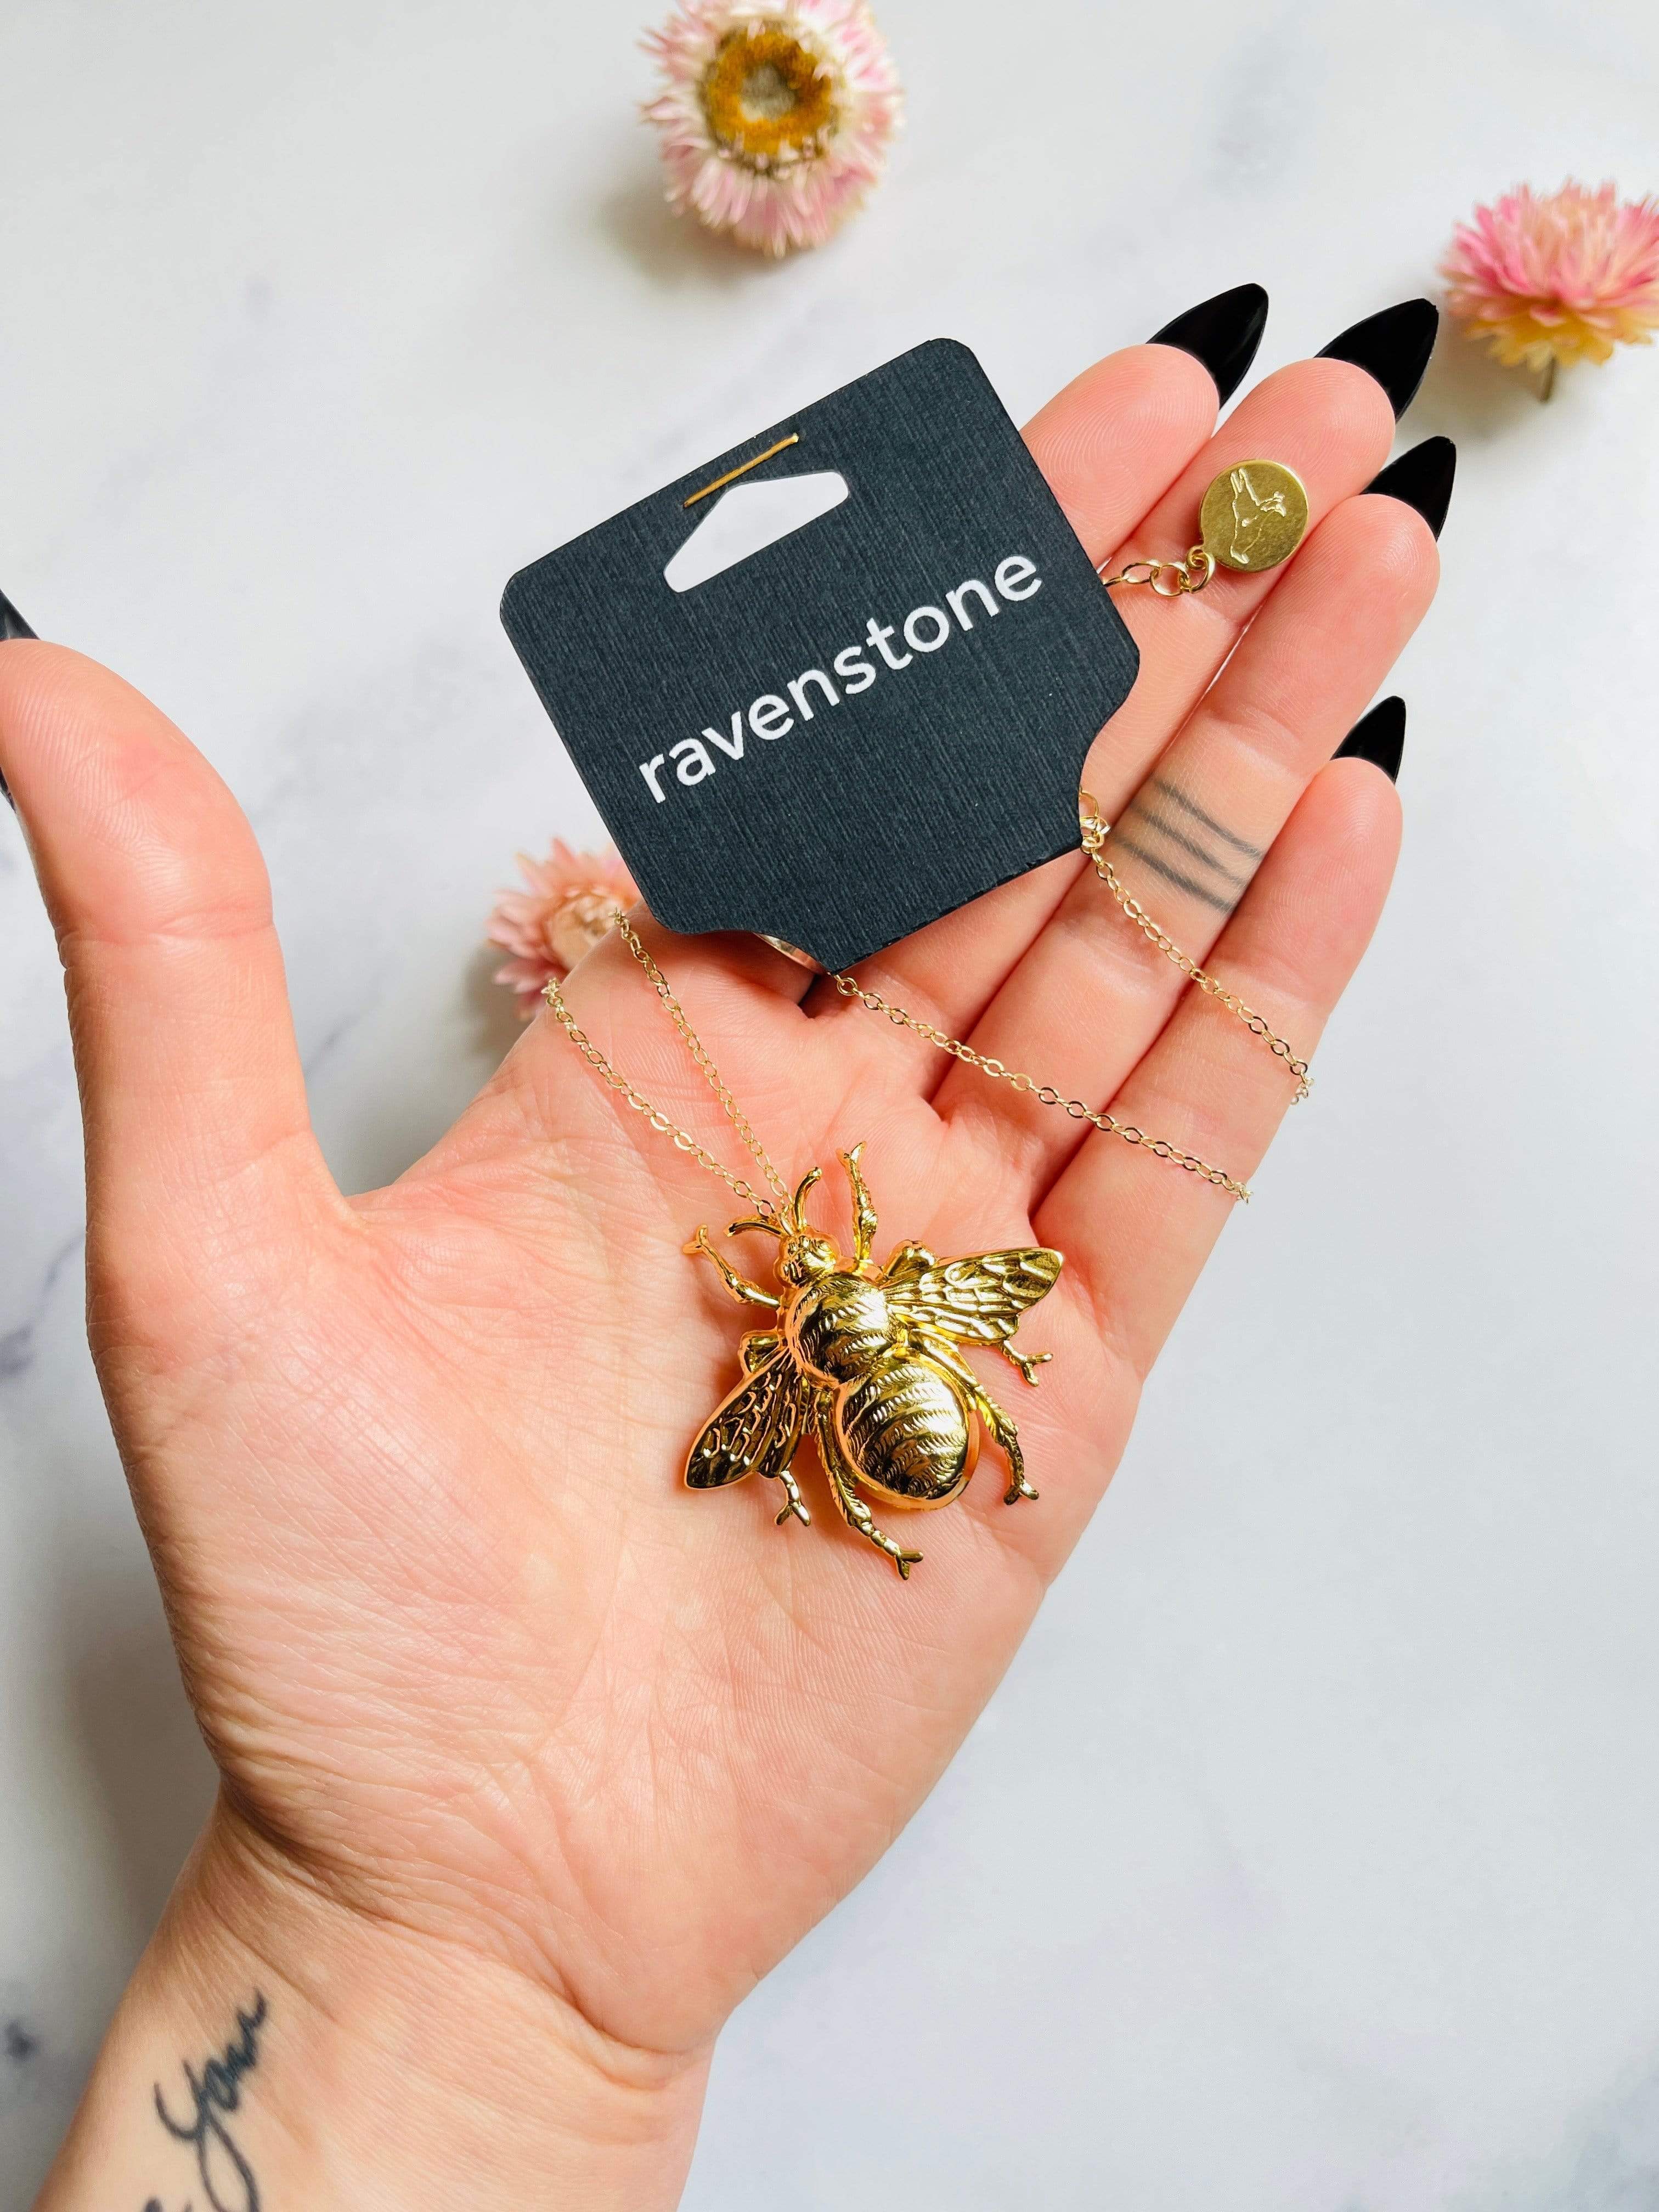 Honeycomb Necklace Bee Jewellery gold Necklace Bumblebee Pendant Christmas  gift | eBay